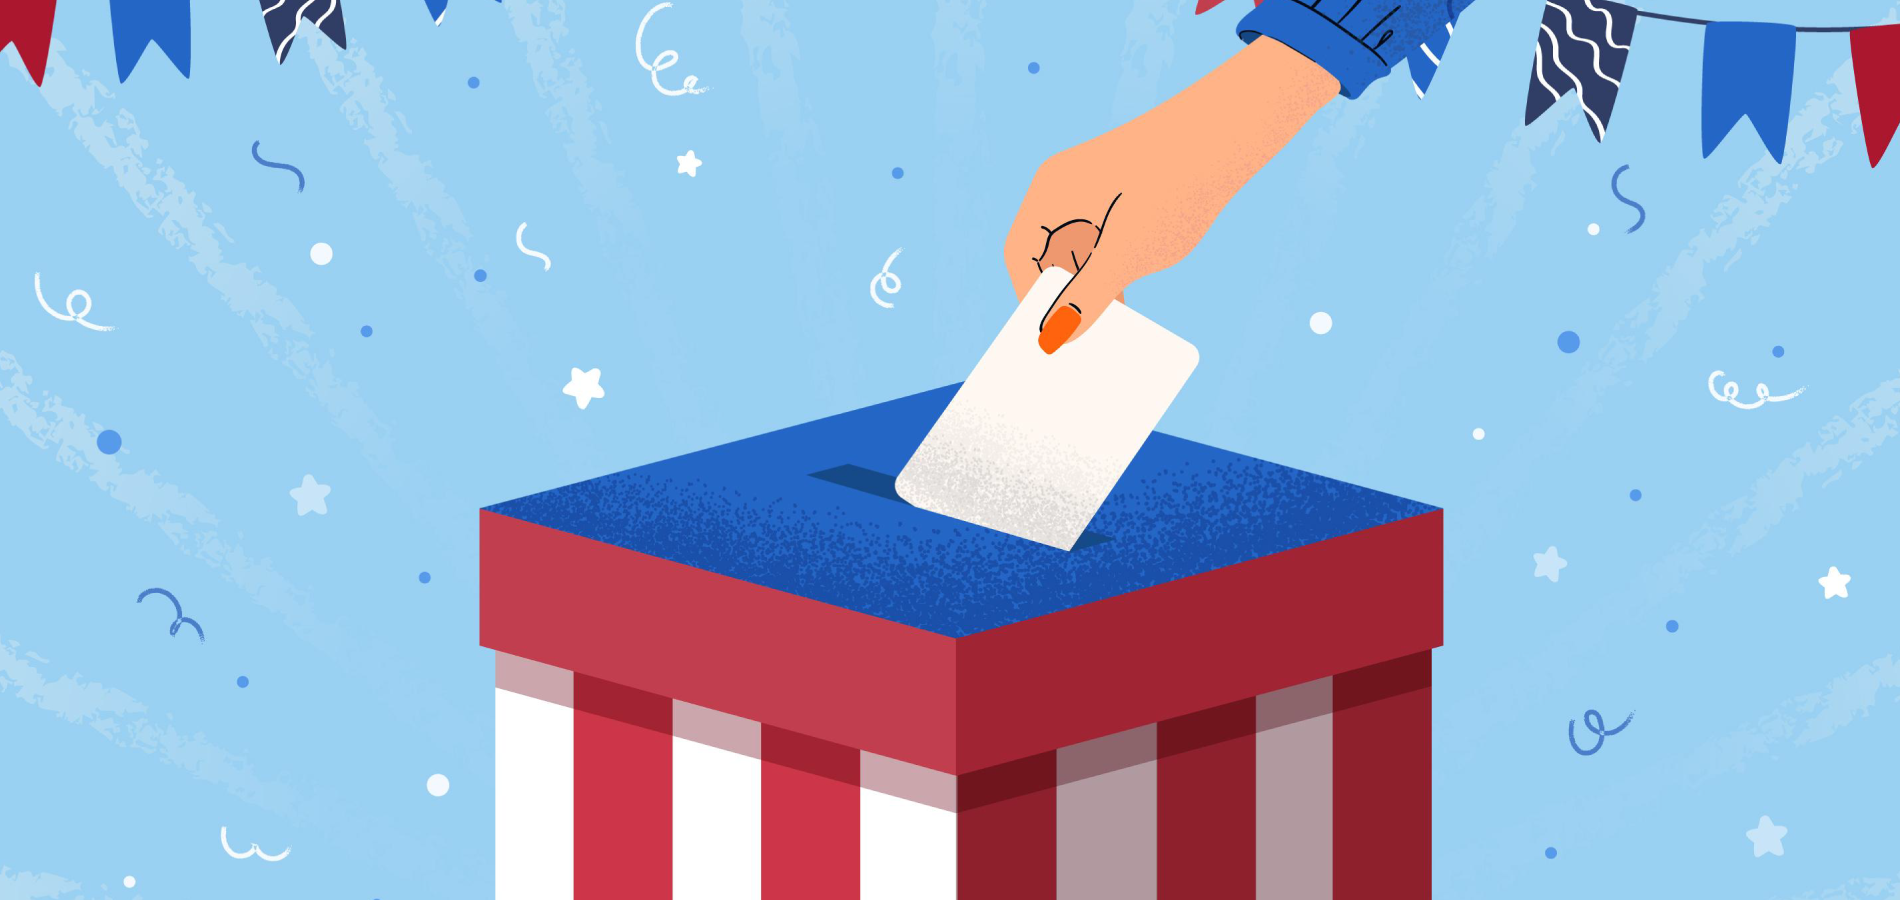 Illustration of a hand placing a ballot in a ballot box